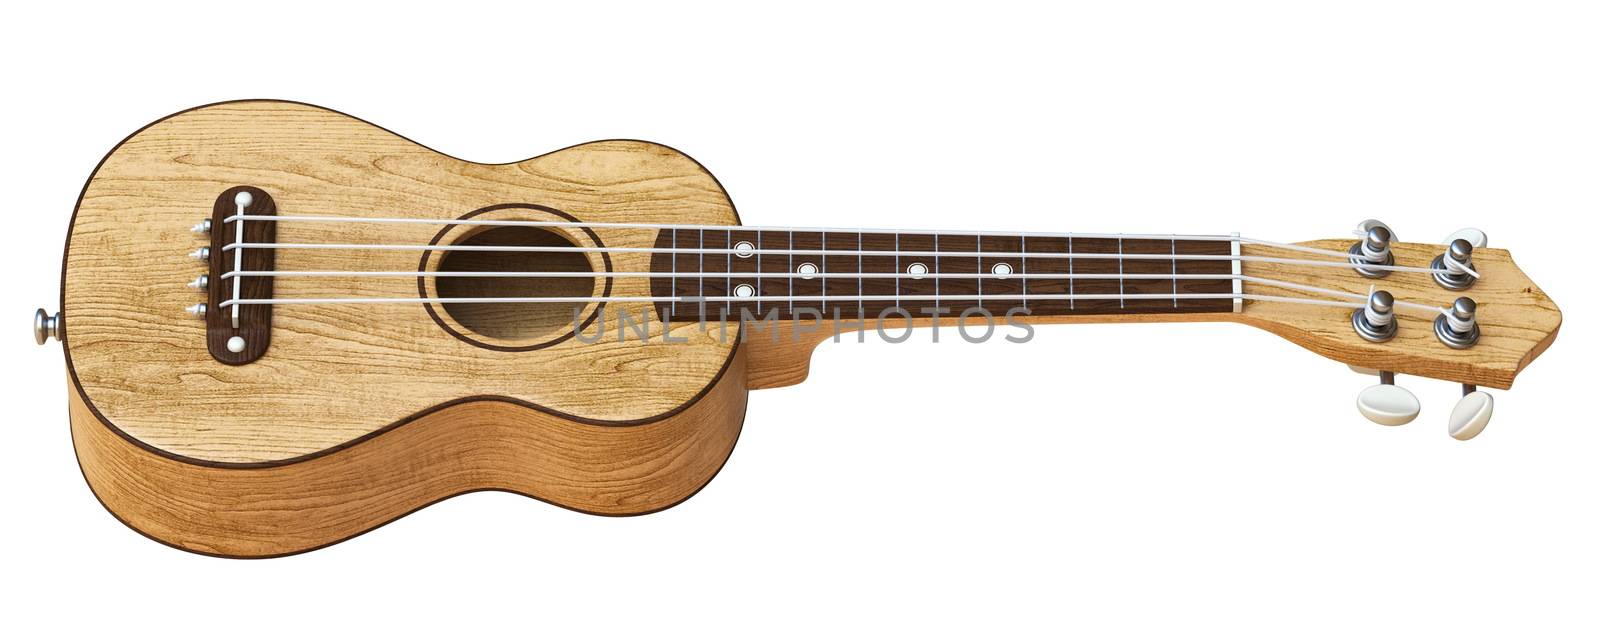 Wooden traditional soprano ukulele Side view 3D render illustration isolated on white background